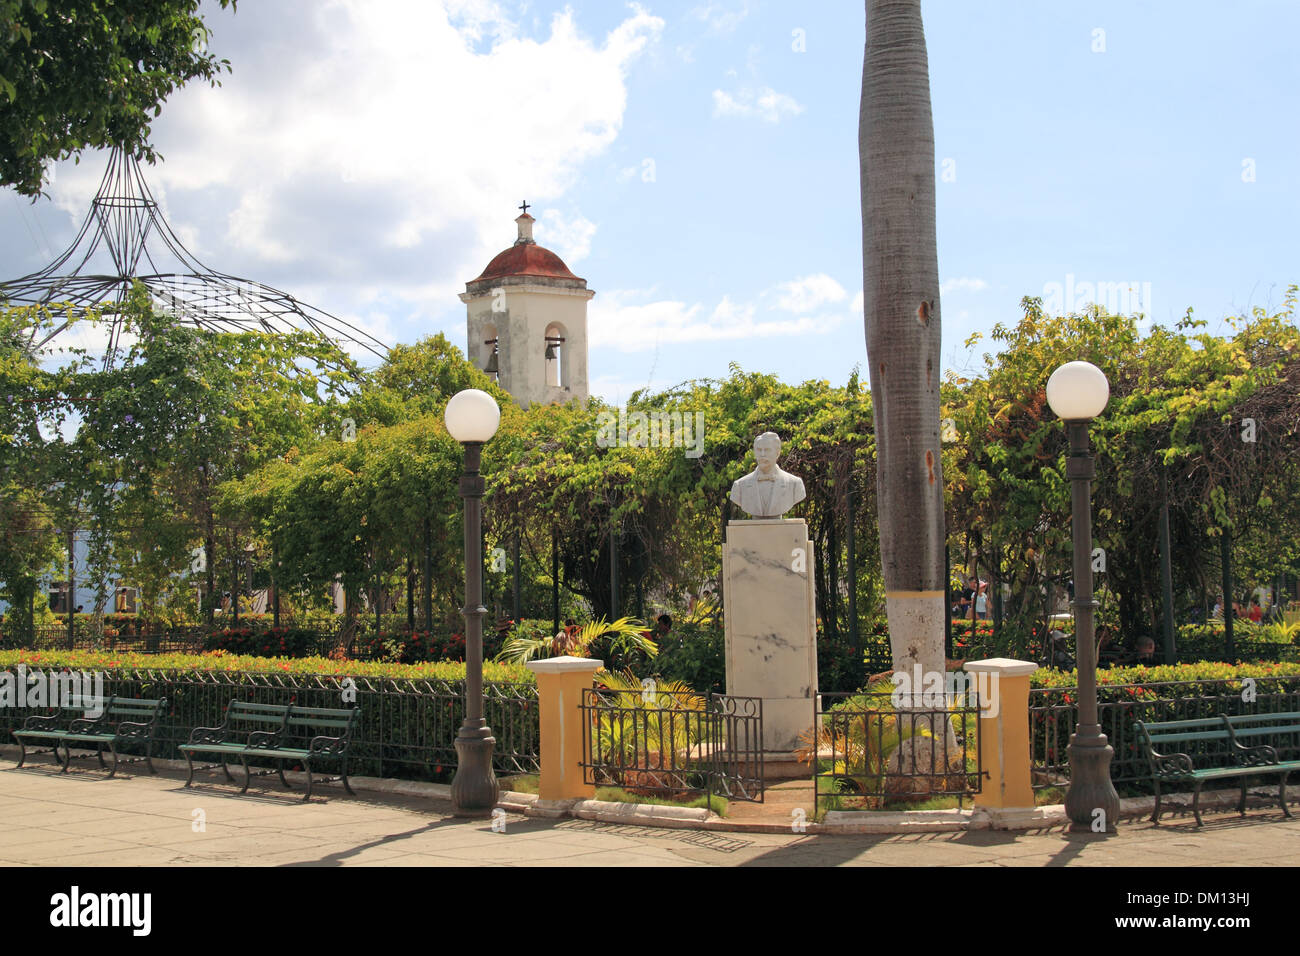 Parque Céspedes, Calle José Martí (aka Jesús María), Trinidad, Sancti Spiritus province, Cuba, Caribbean Sea, Central America Stock Photo